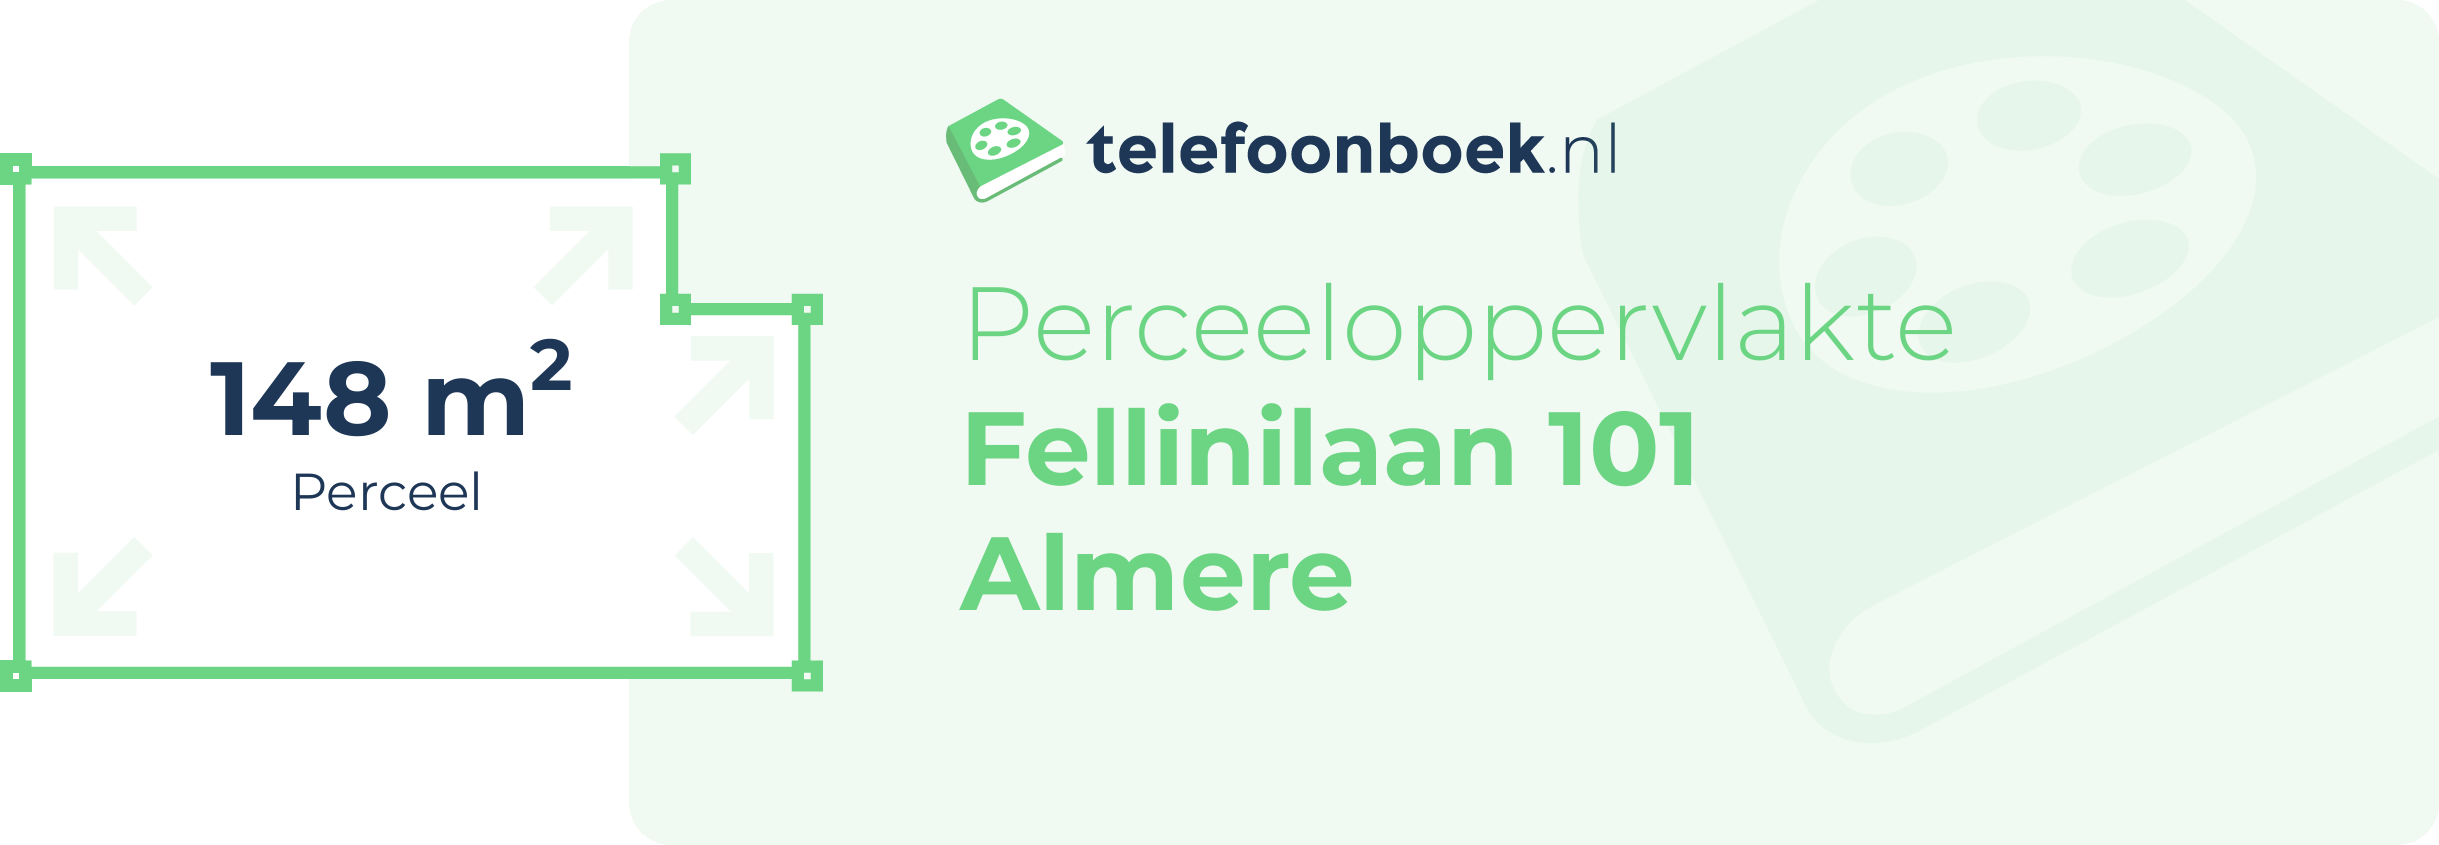 Perceeloppervlakte Fellinilaan 101 Almere